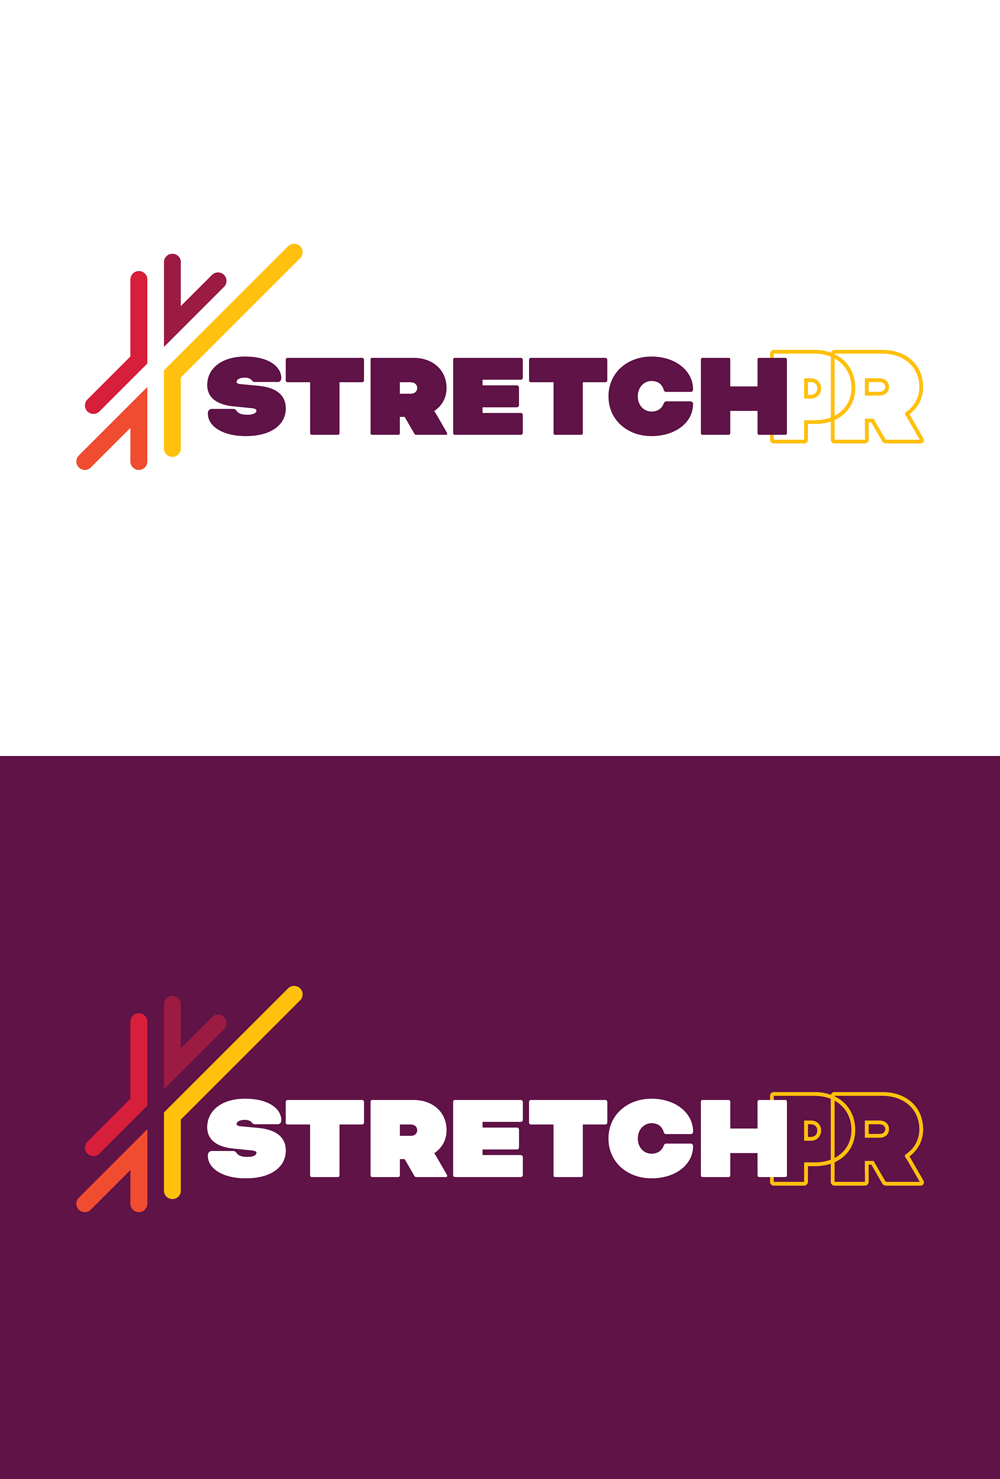 StretchPR logos